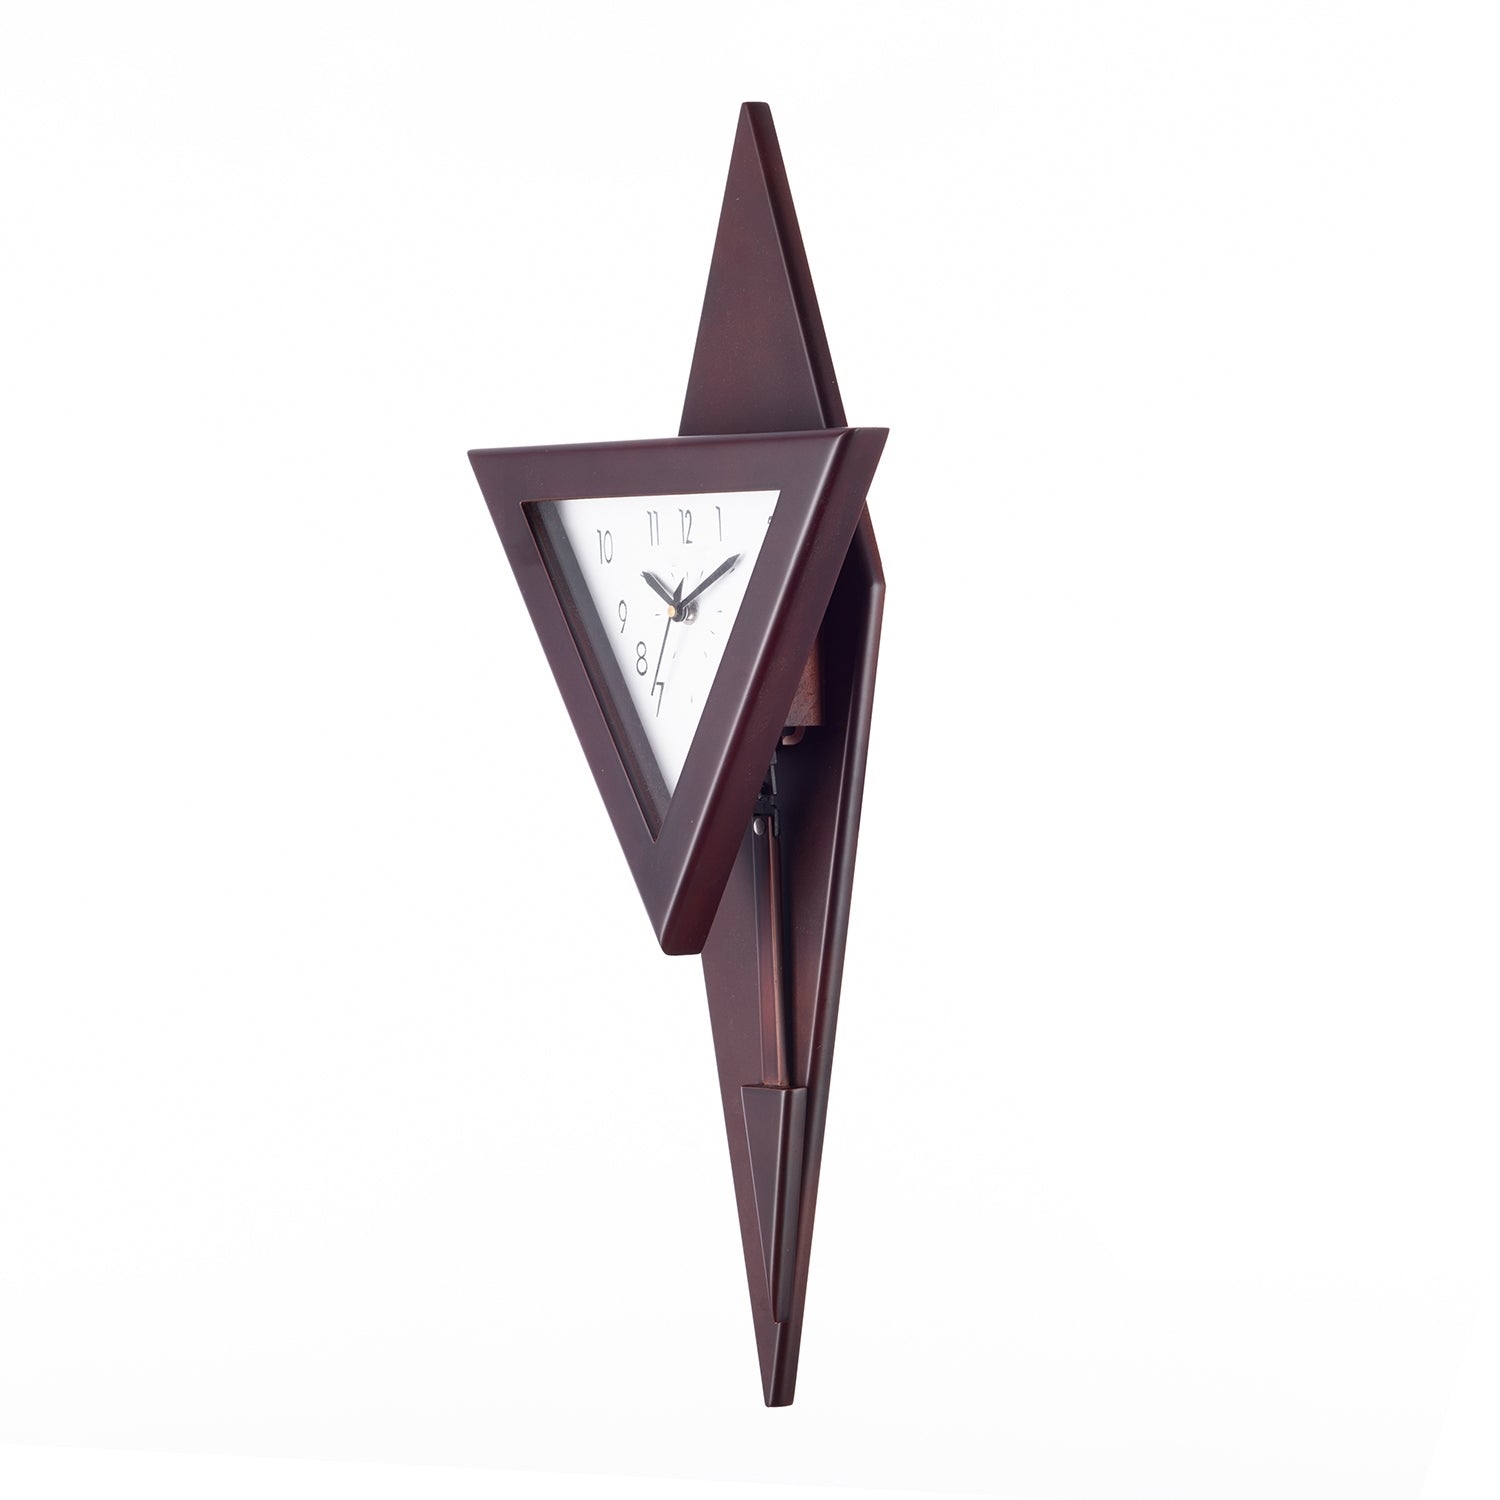 Decorative Analog Triangle Shape Wooden Pendulum Wall Clock 2